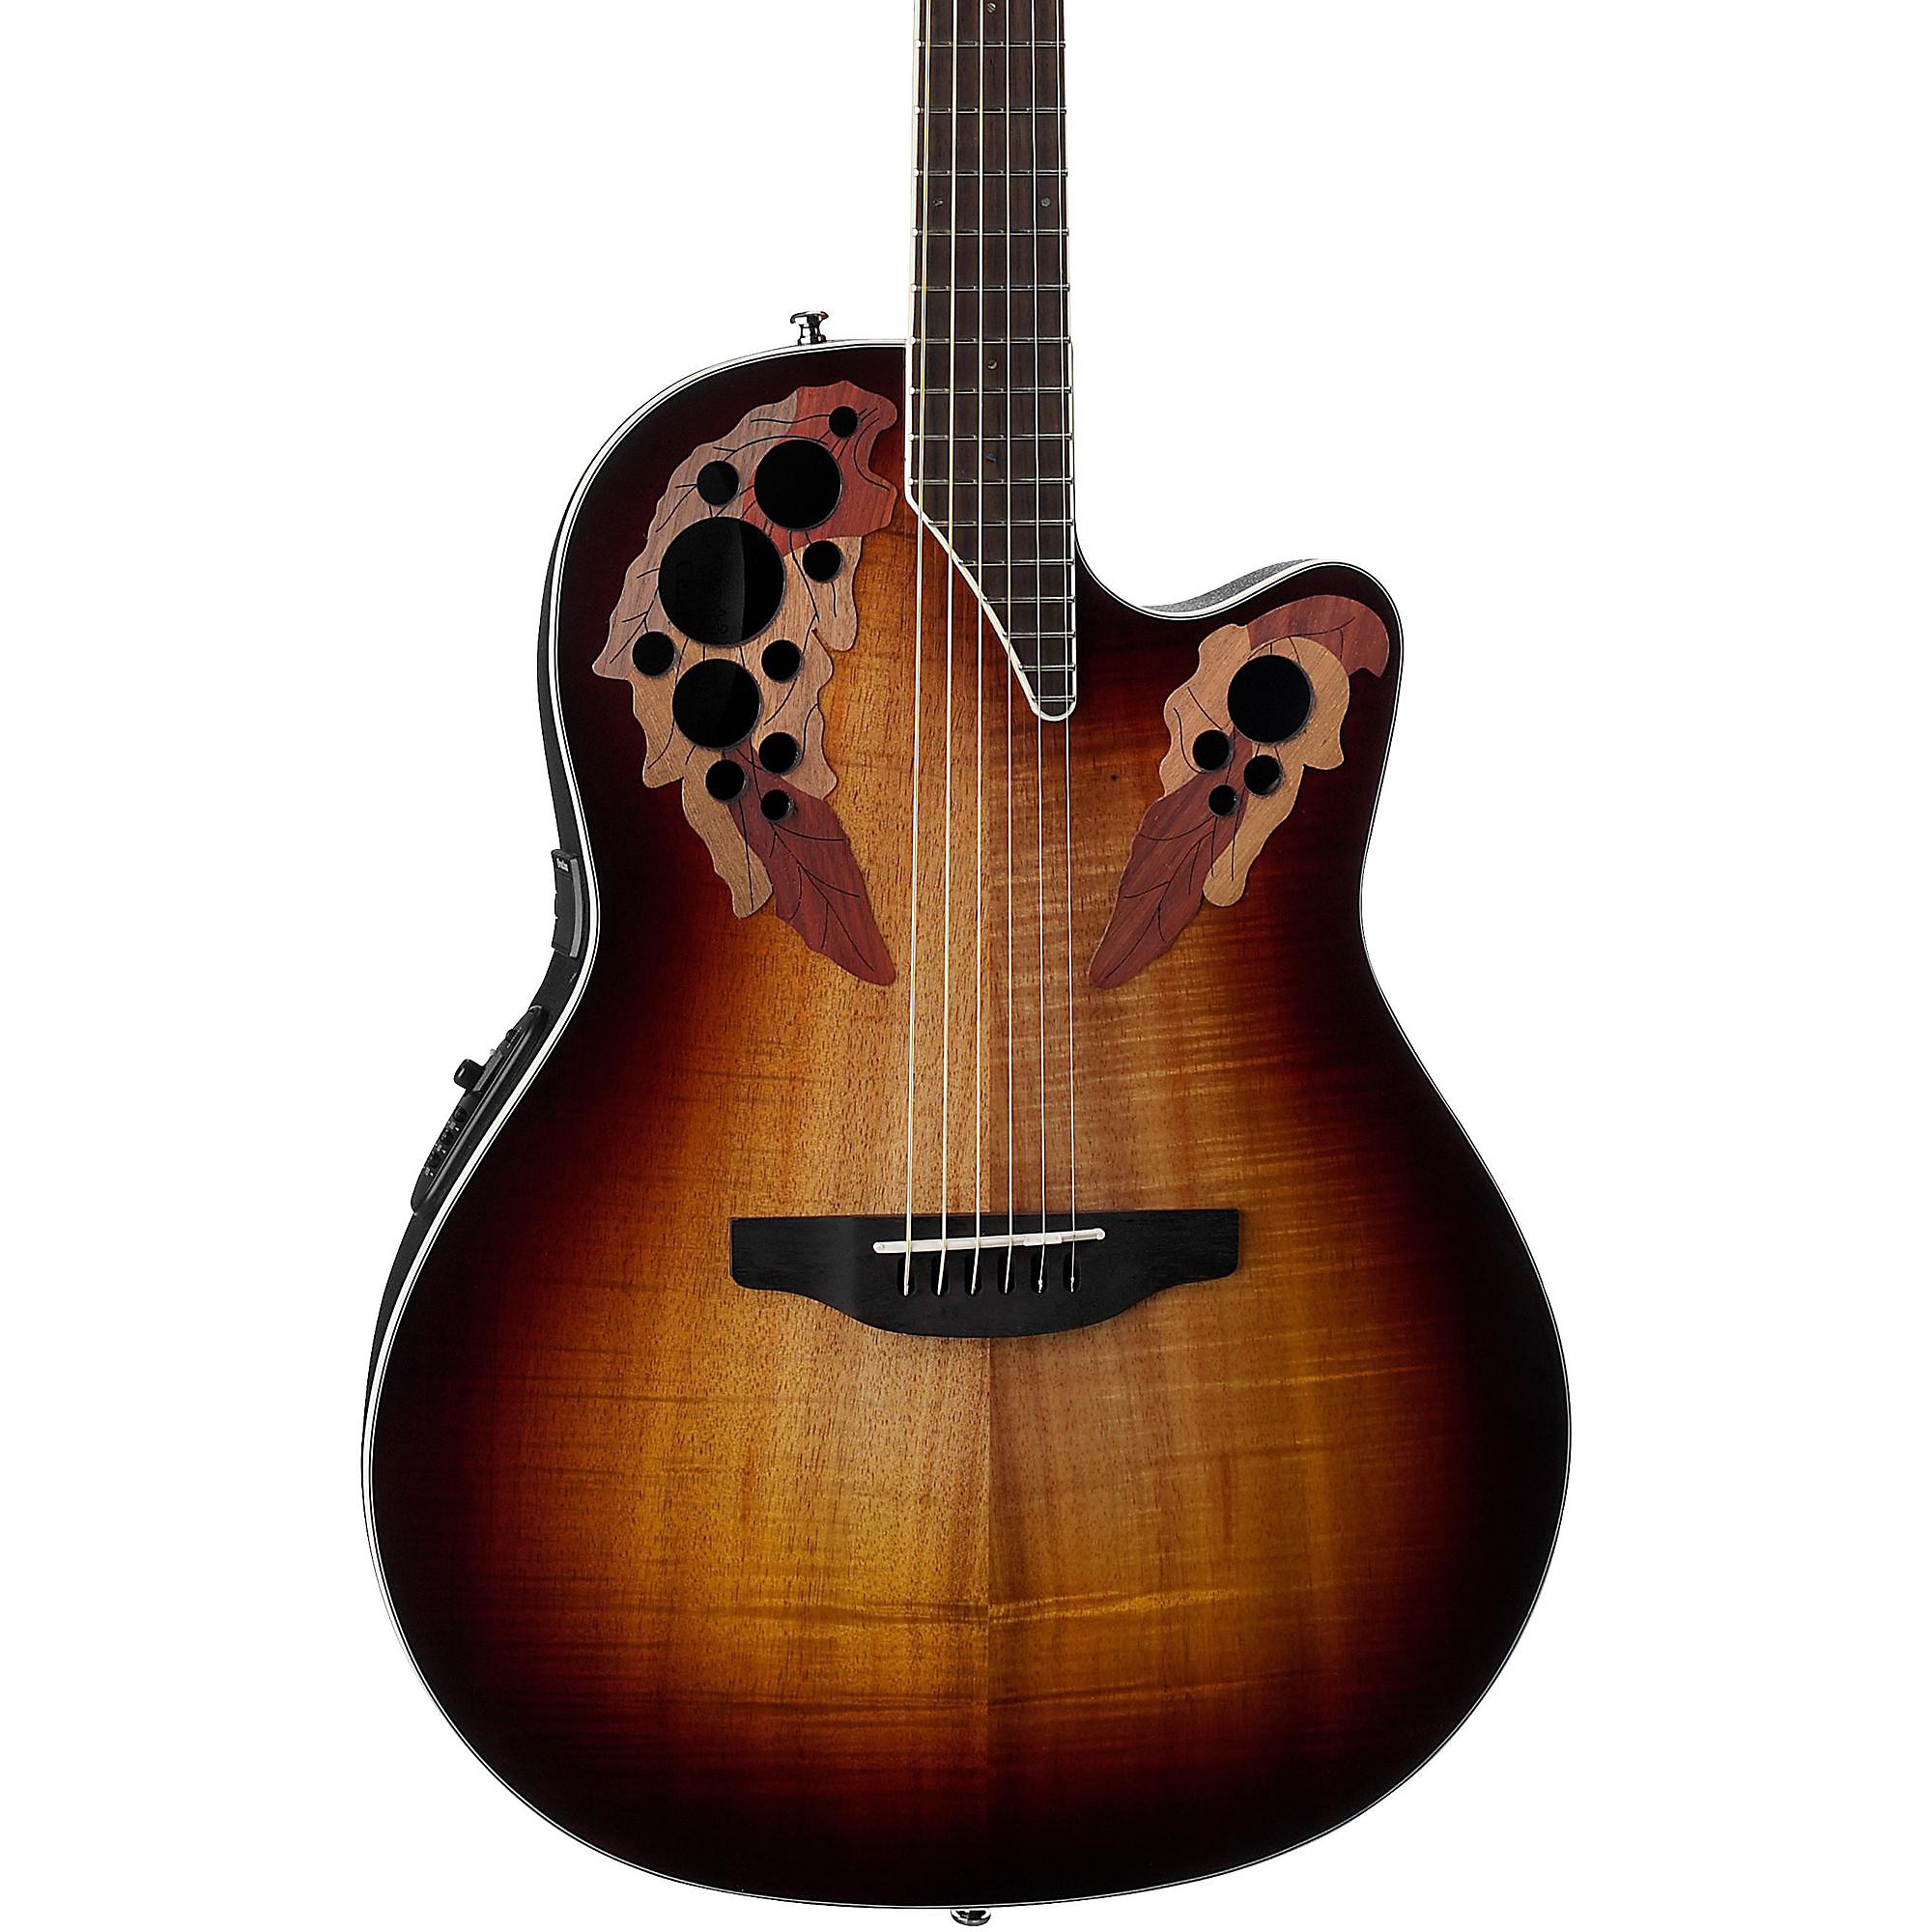 Акустически-электрическая гитара Ovation CE48P Celebrity Elite Plus Koa Burst